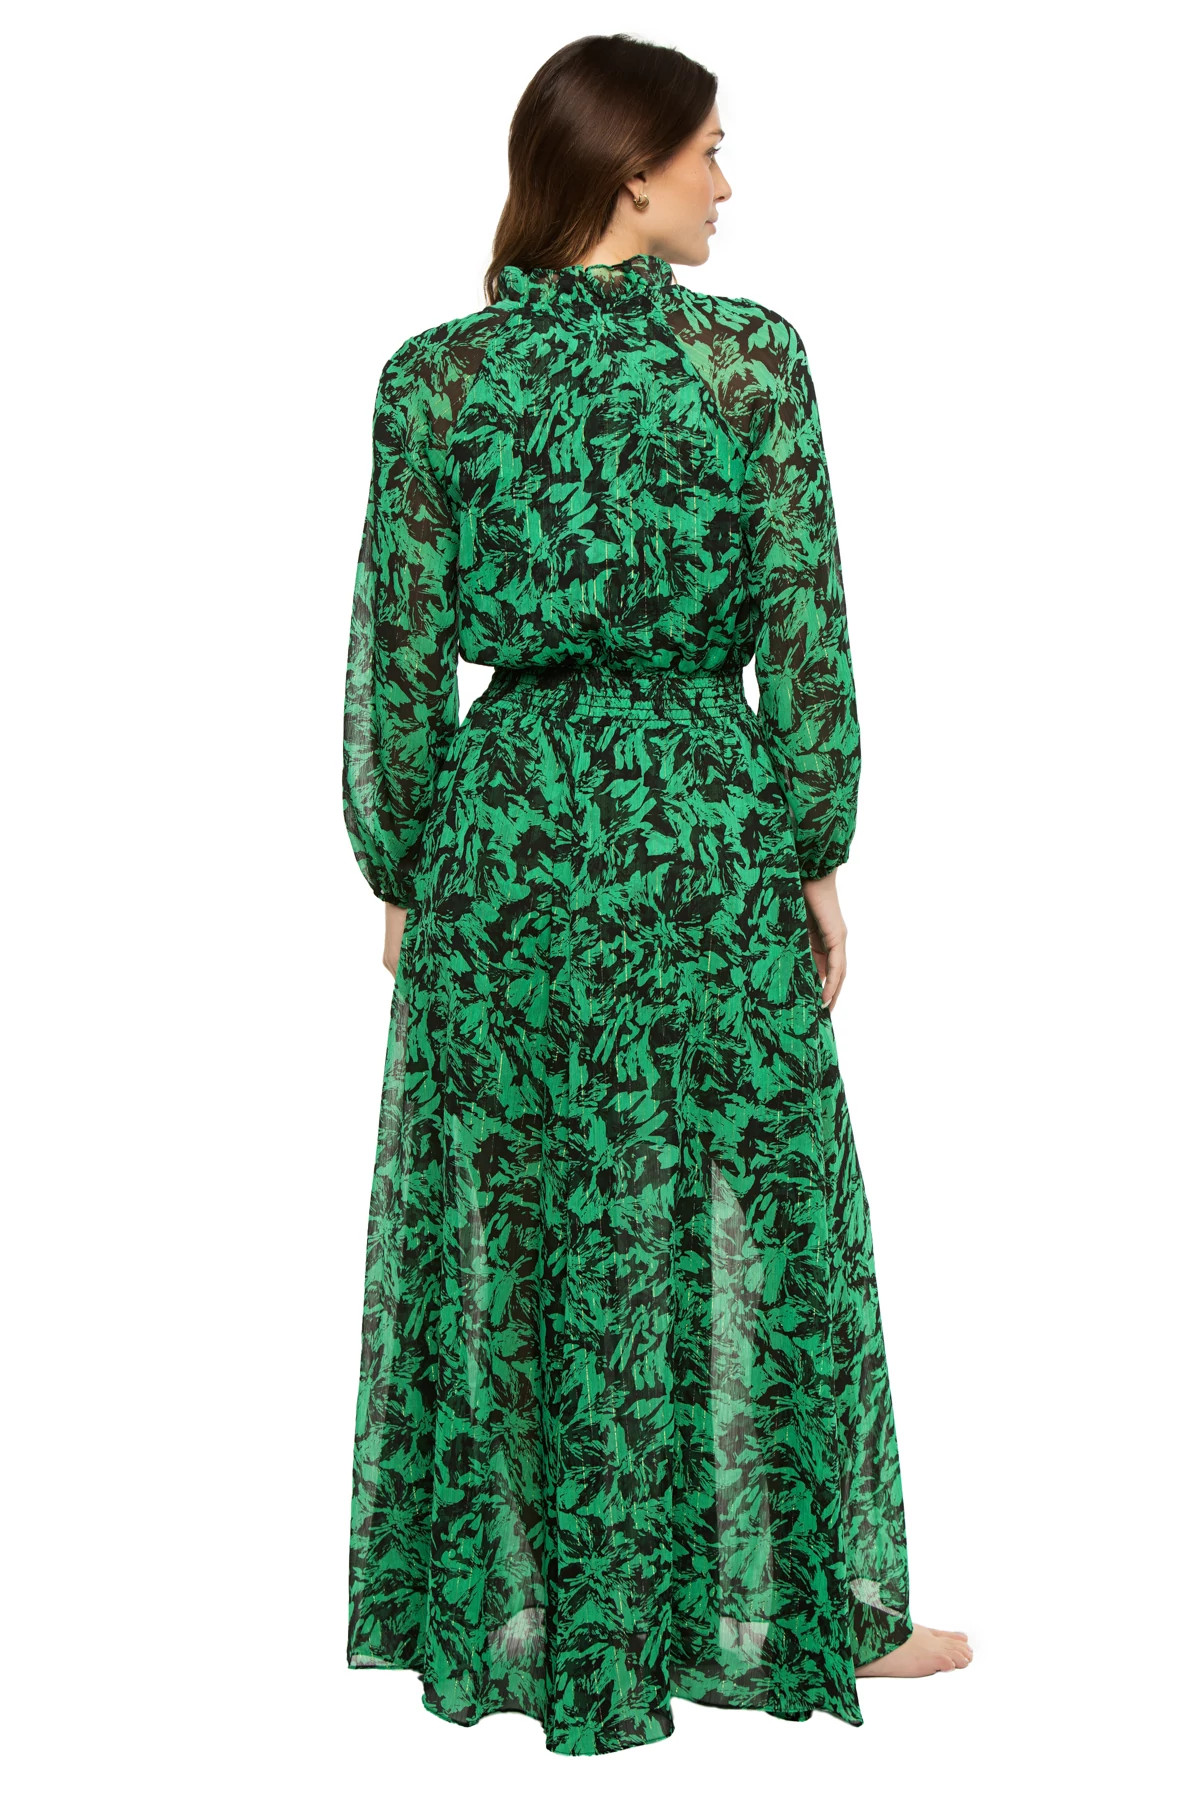 EMERALD ABSTRACT Jocasta Long Sleeve Maxi Dress image number 2